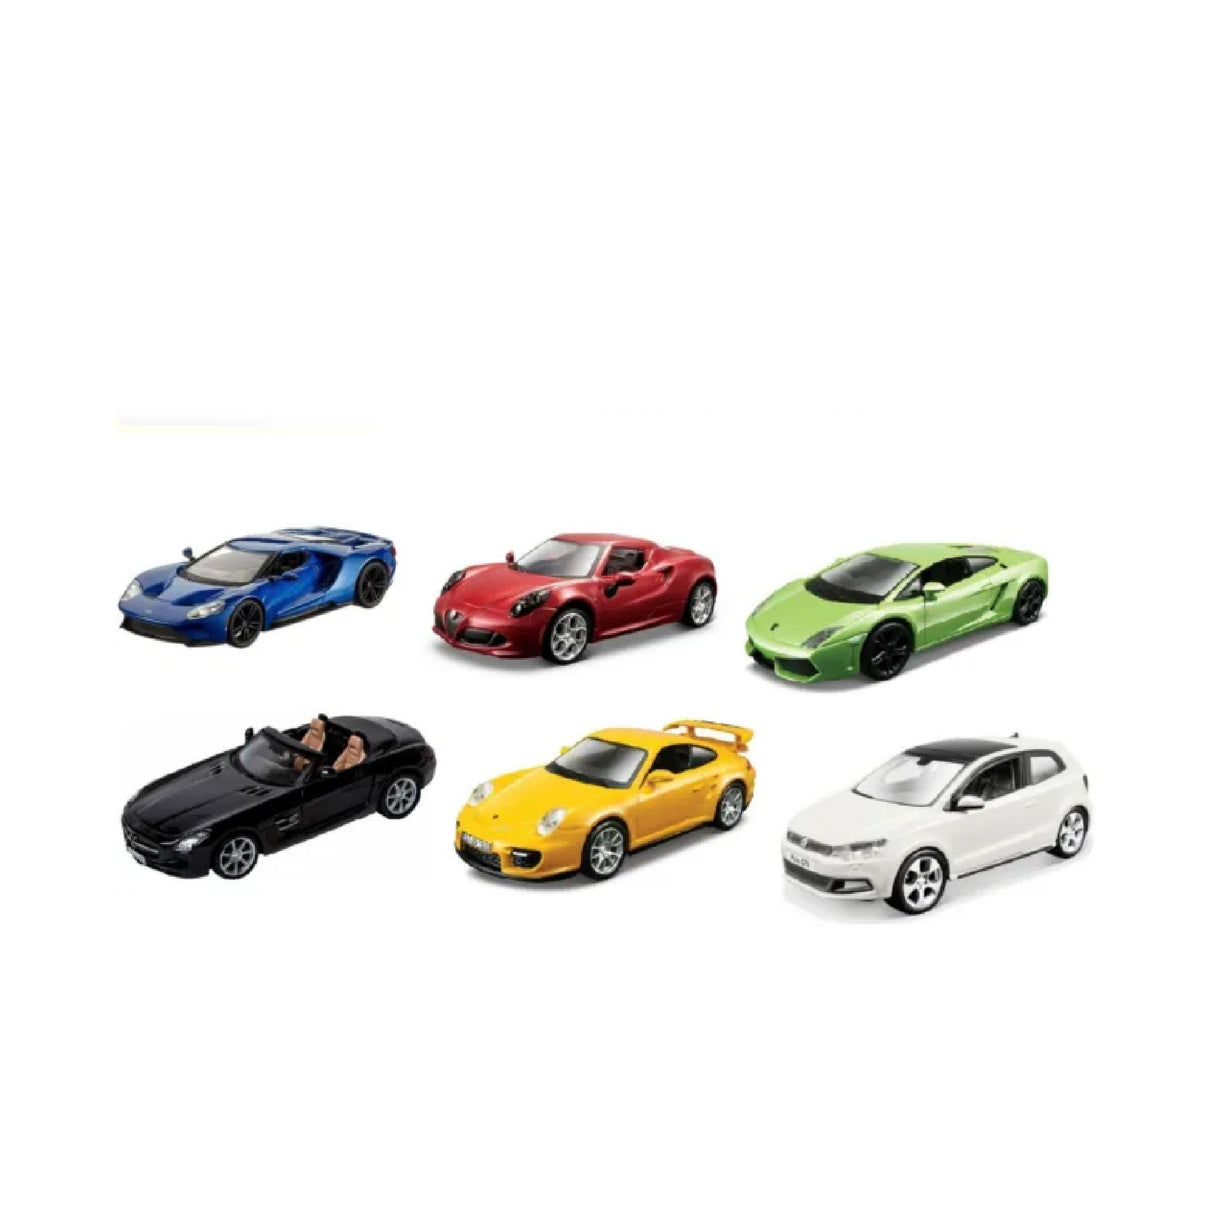 Bburago Assorted Diecast Cars  Multicolor 1:32 Scale - Assorted